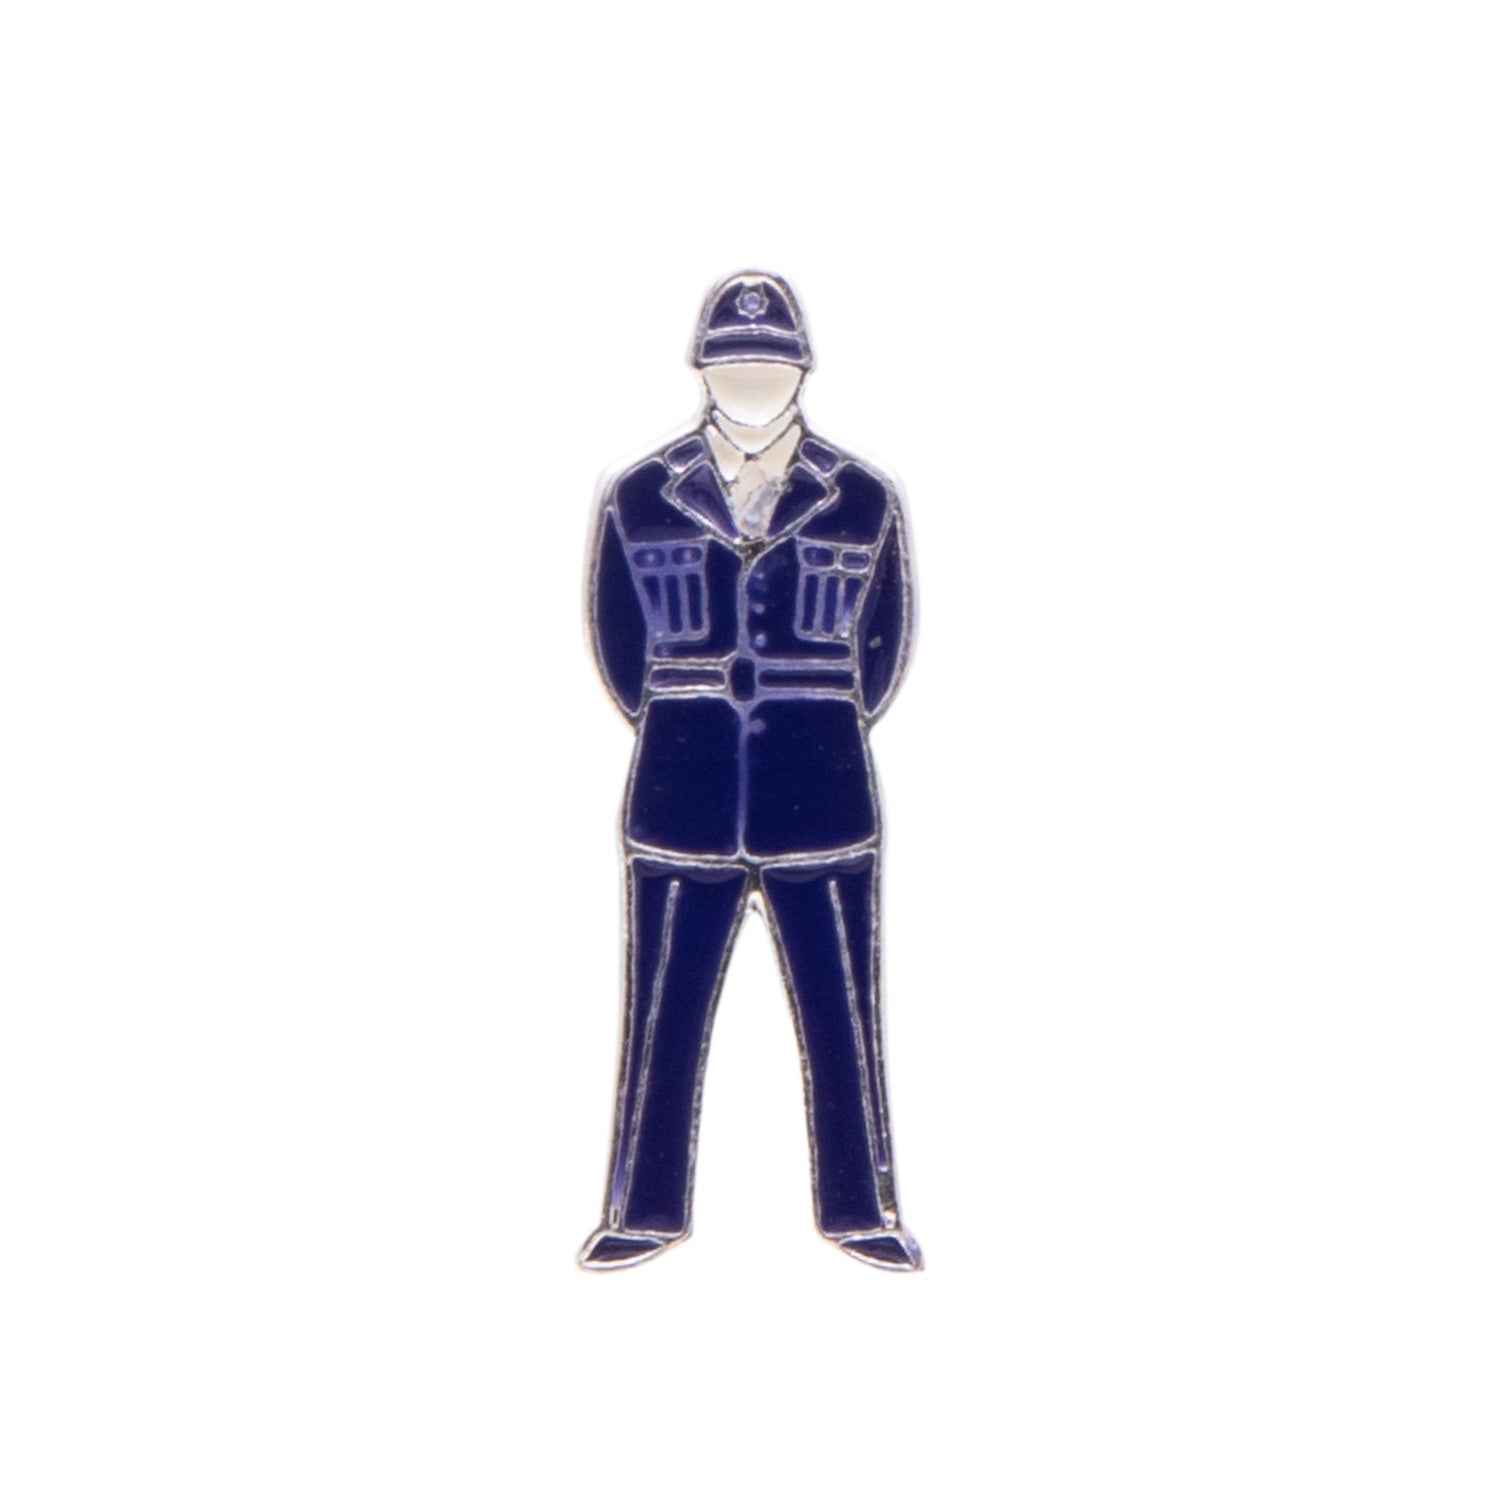 Pin Badge - Police